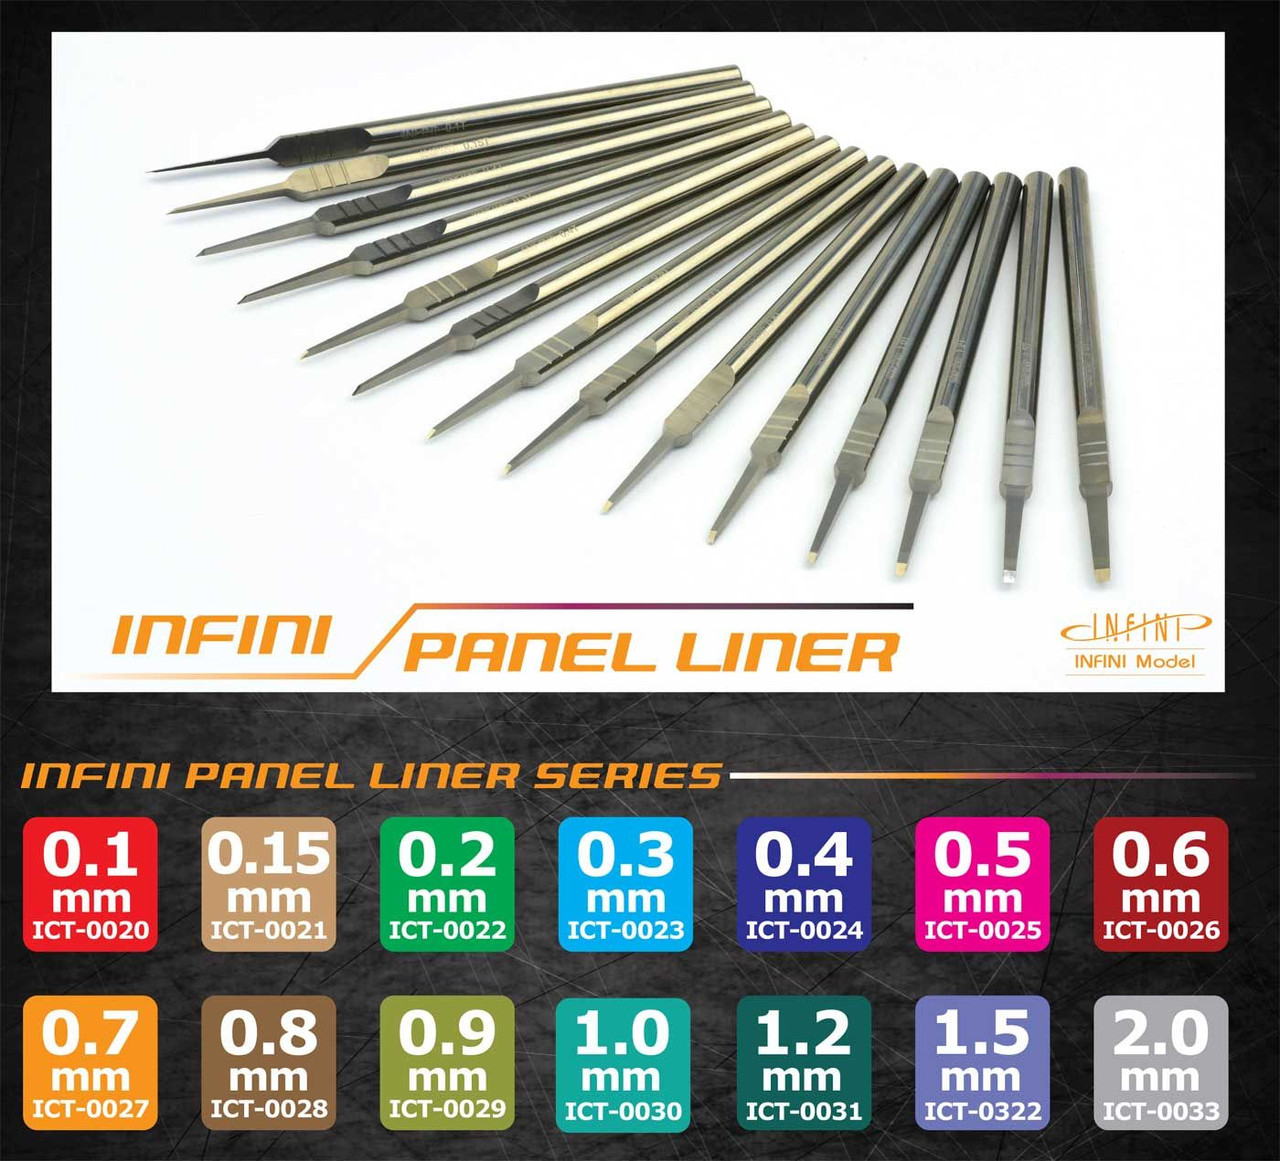 Infini Model Panel Liner 2.0mm Plastic Model Tool Ict0033